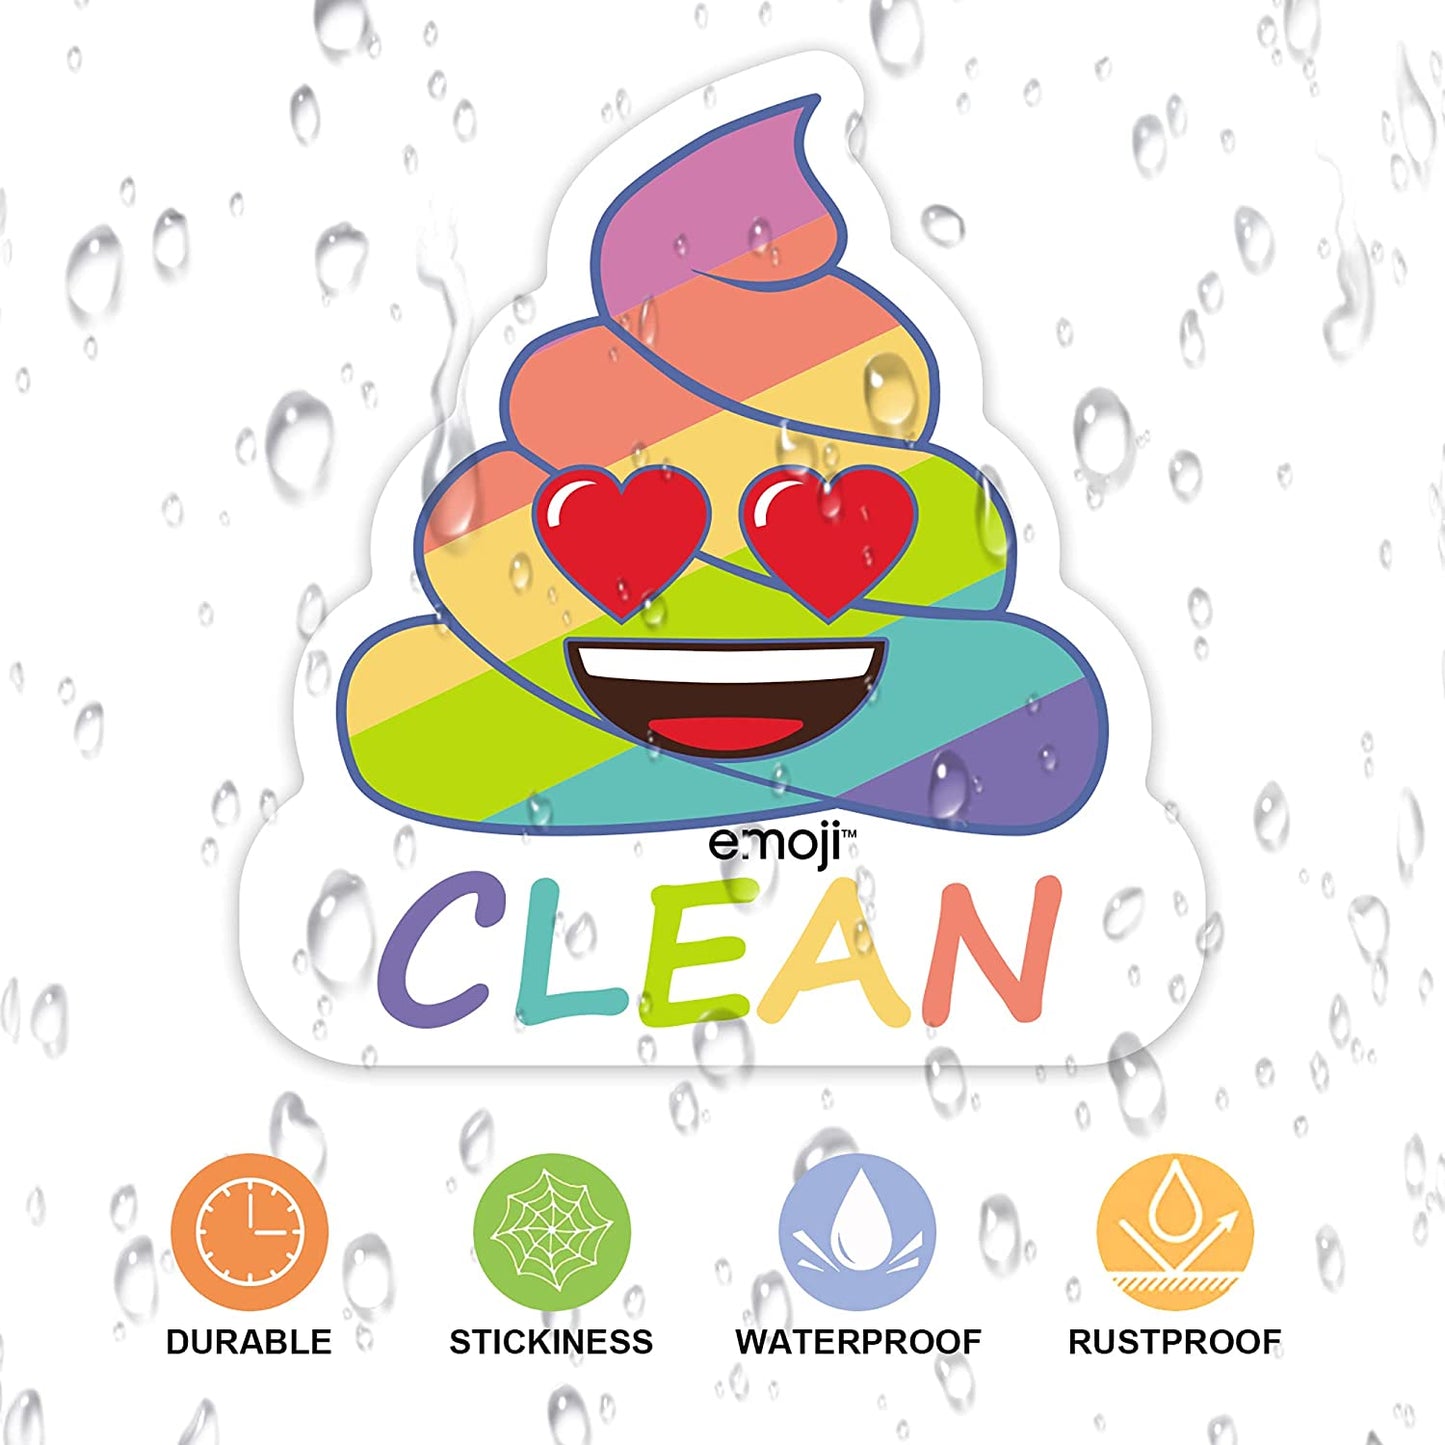 MORCART Poop Emoji Clean Dirty Dishwasher Magnet